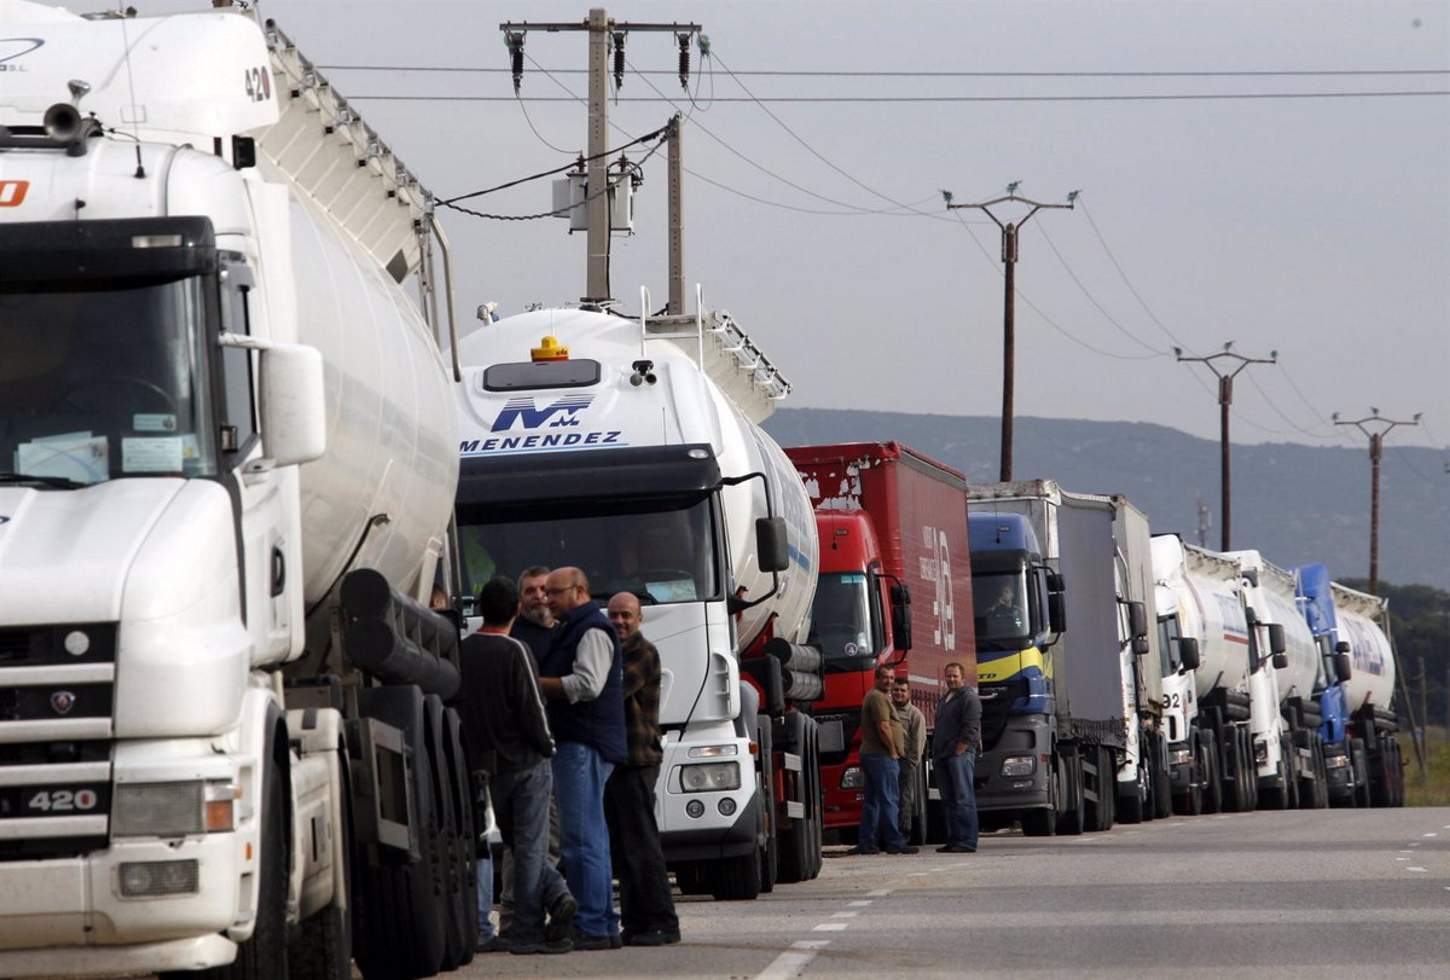 camioneros europa press